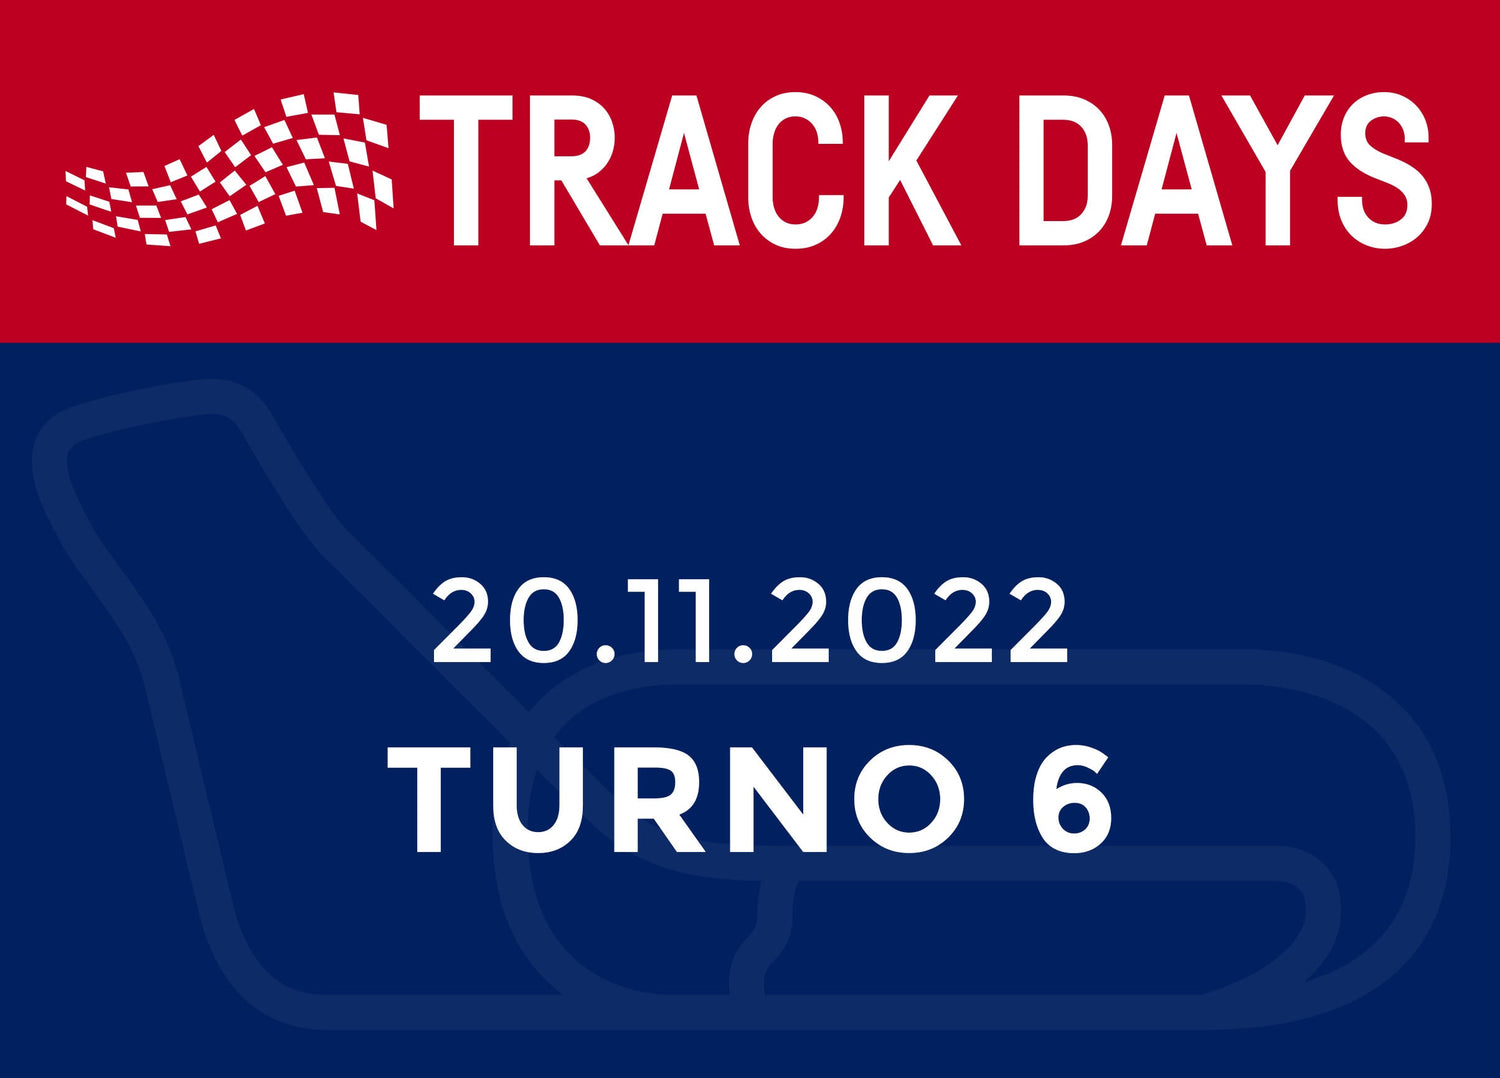 TRACK DAYS 20.11.22 TURNO 6